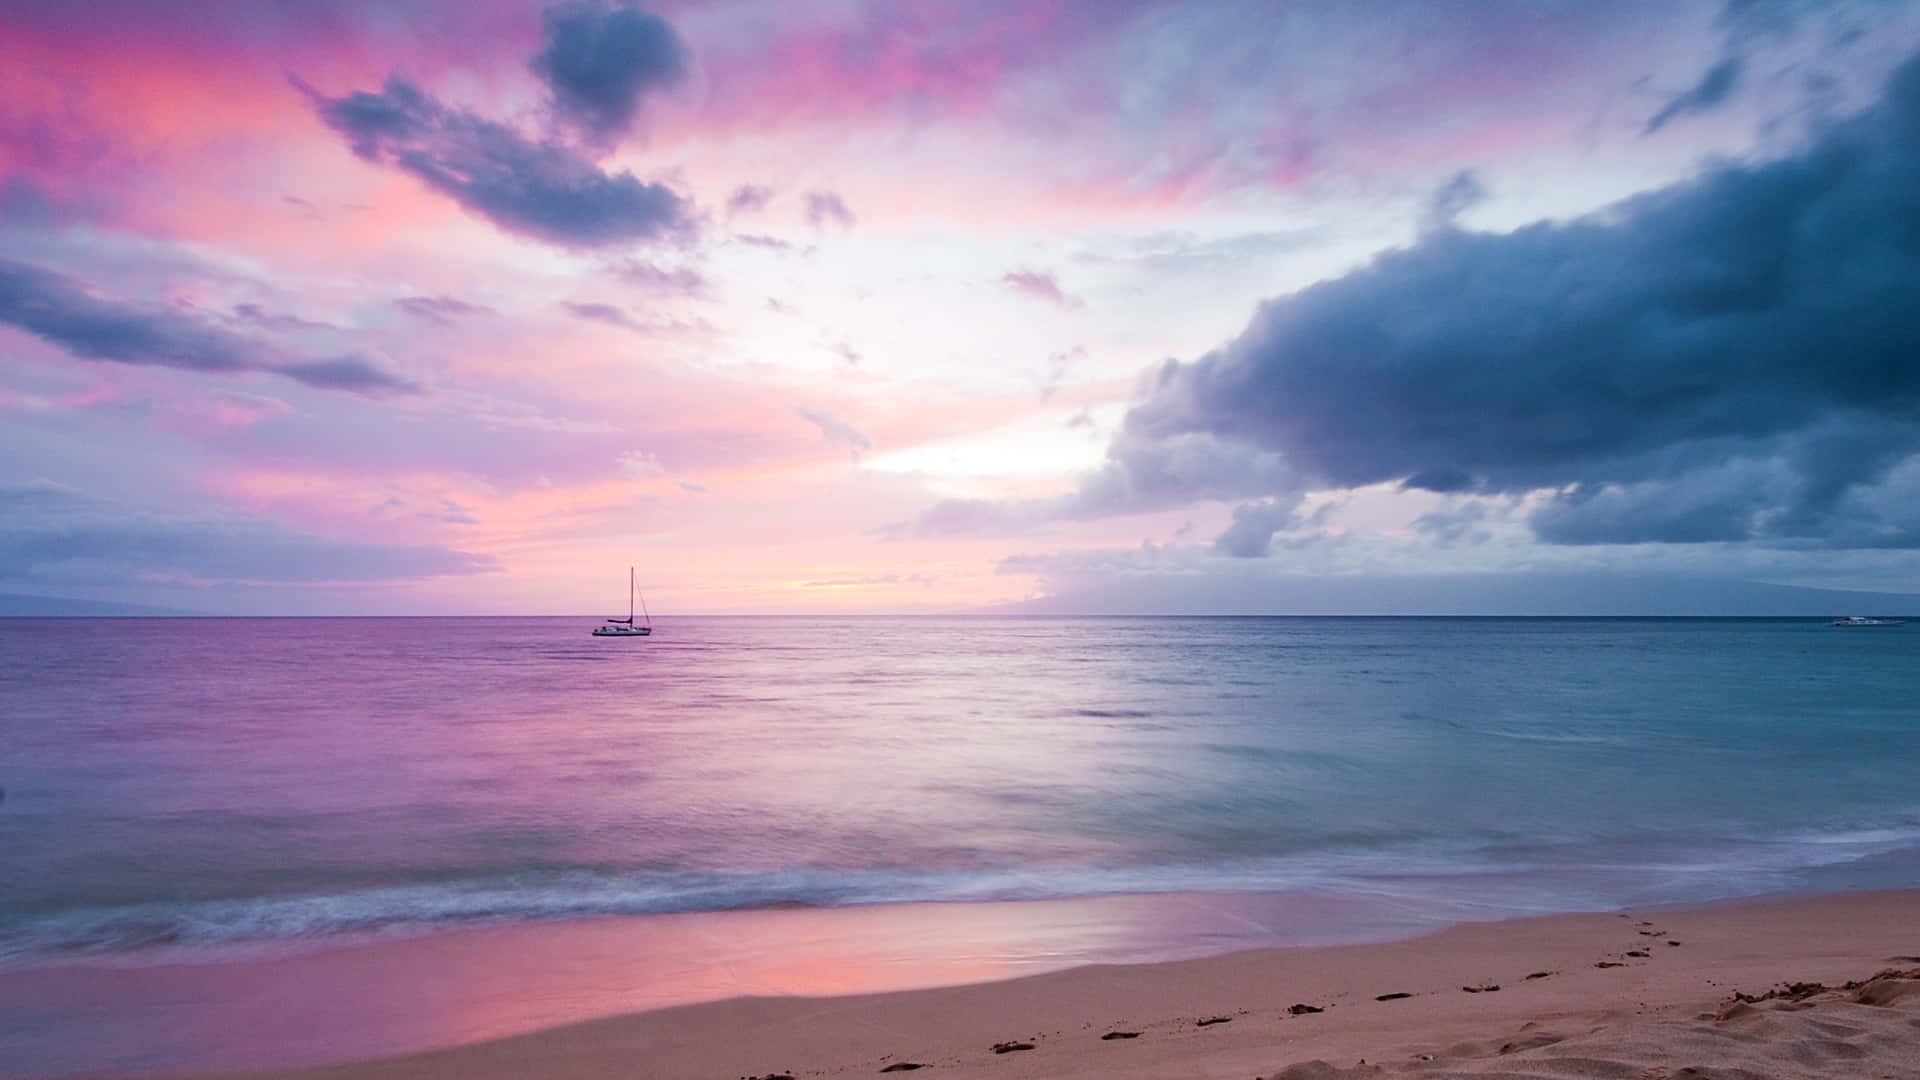 Enjoy the morning sun rising over the endless blue ocean in a peaceful setting at Ocean Beach. Wallpaper